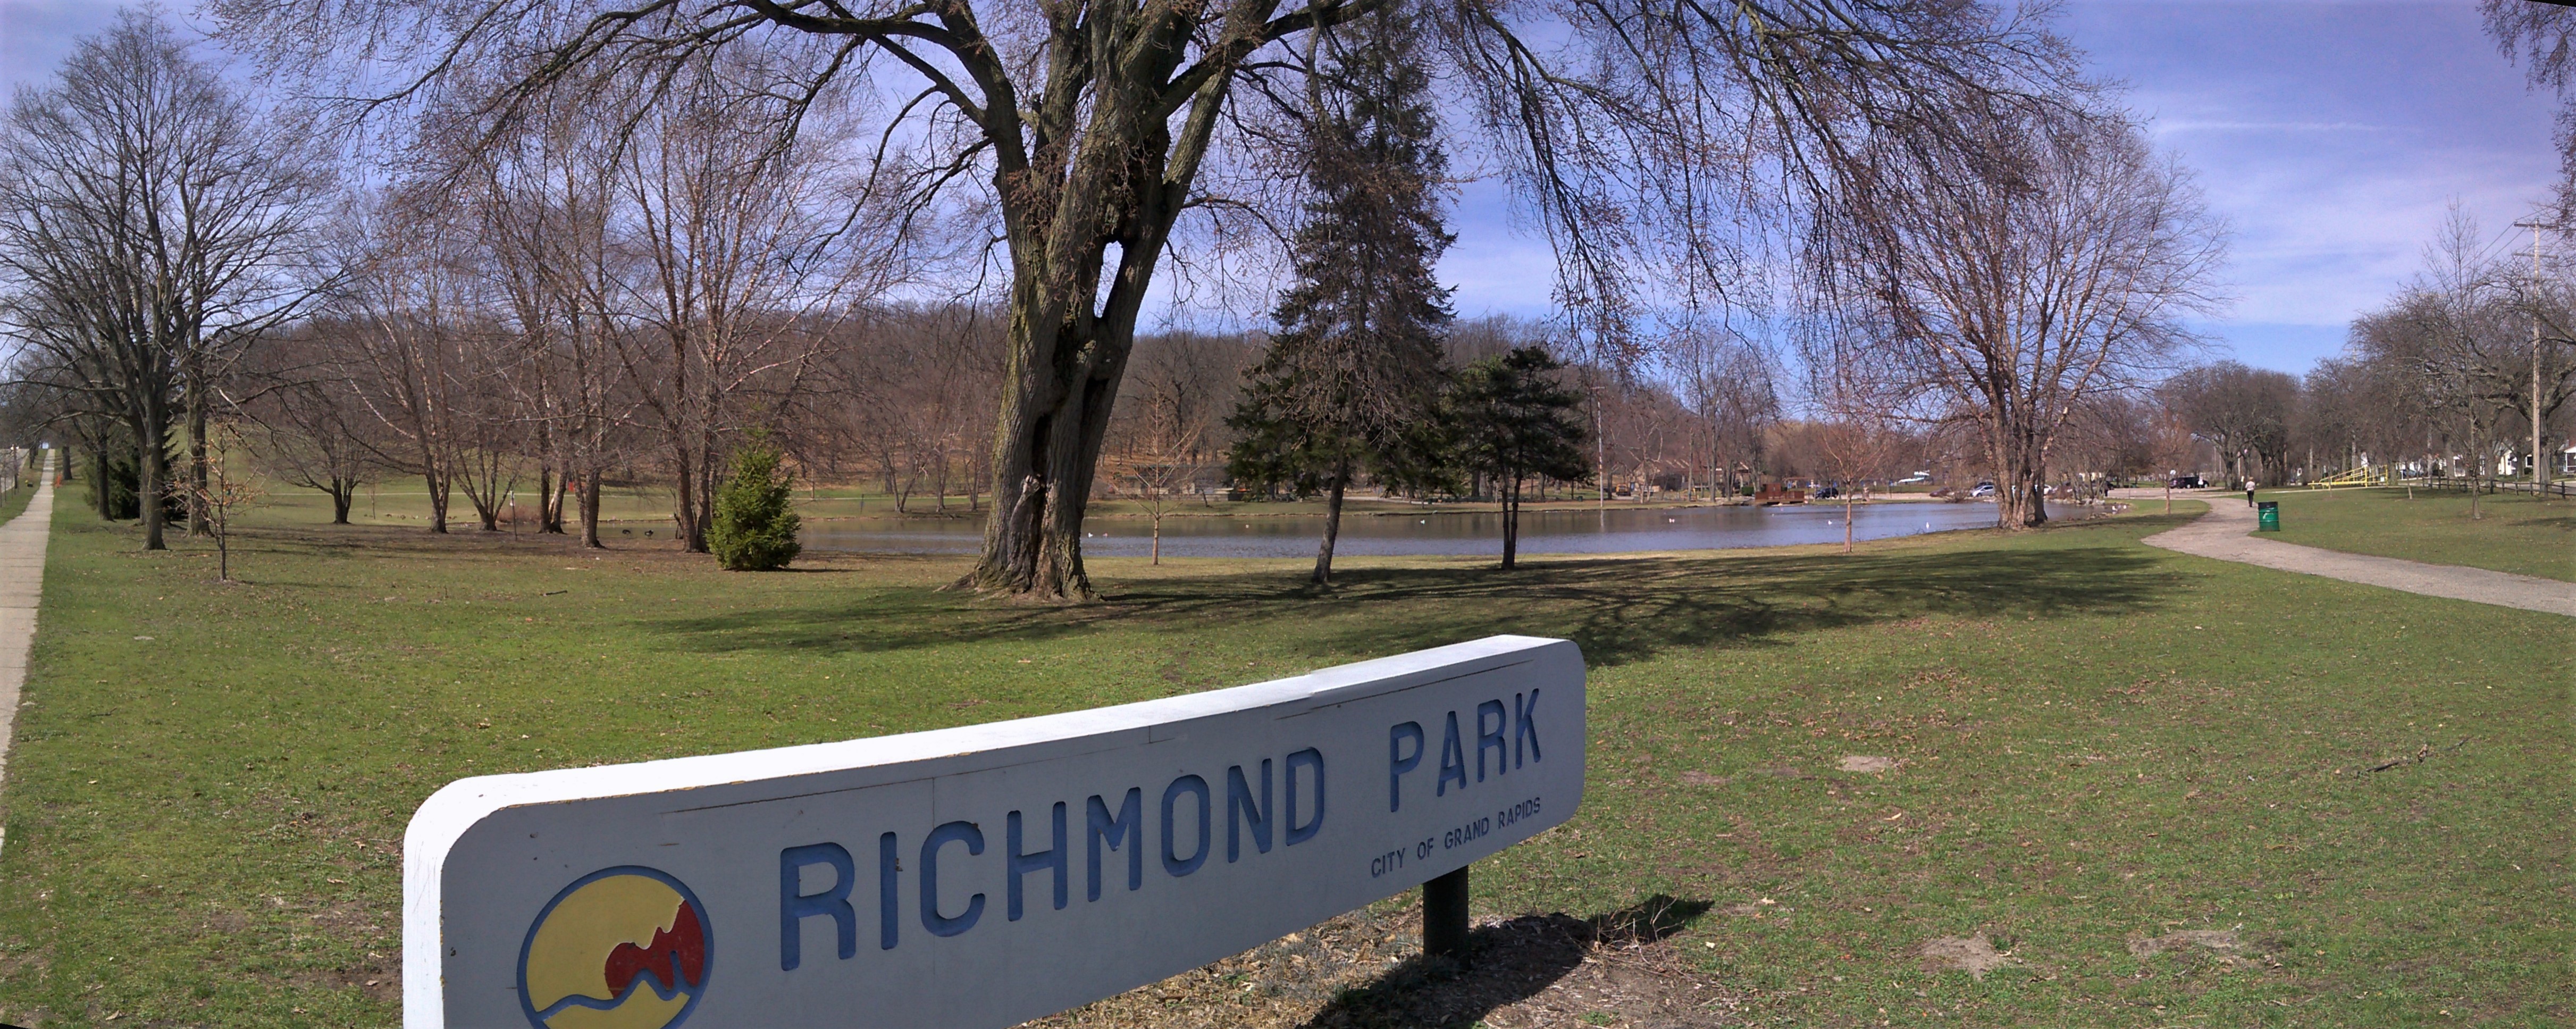 7 of the Best Walks in Richmond travel